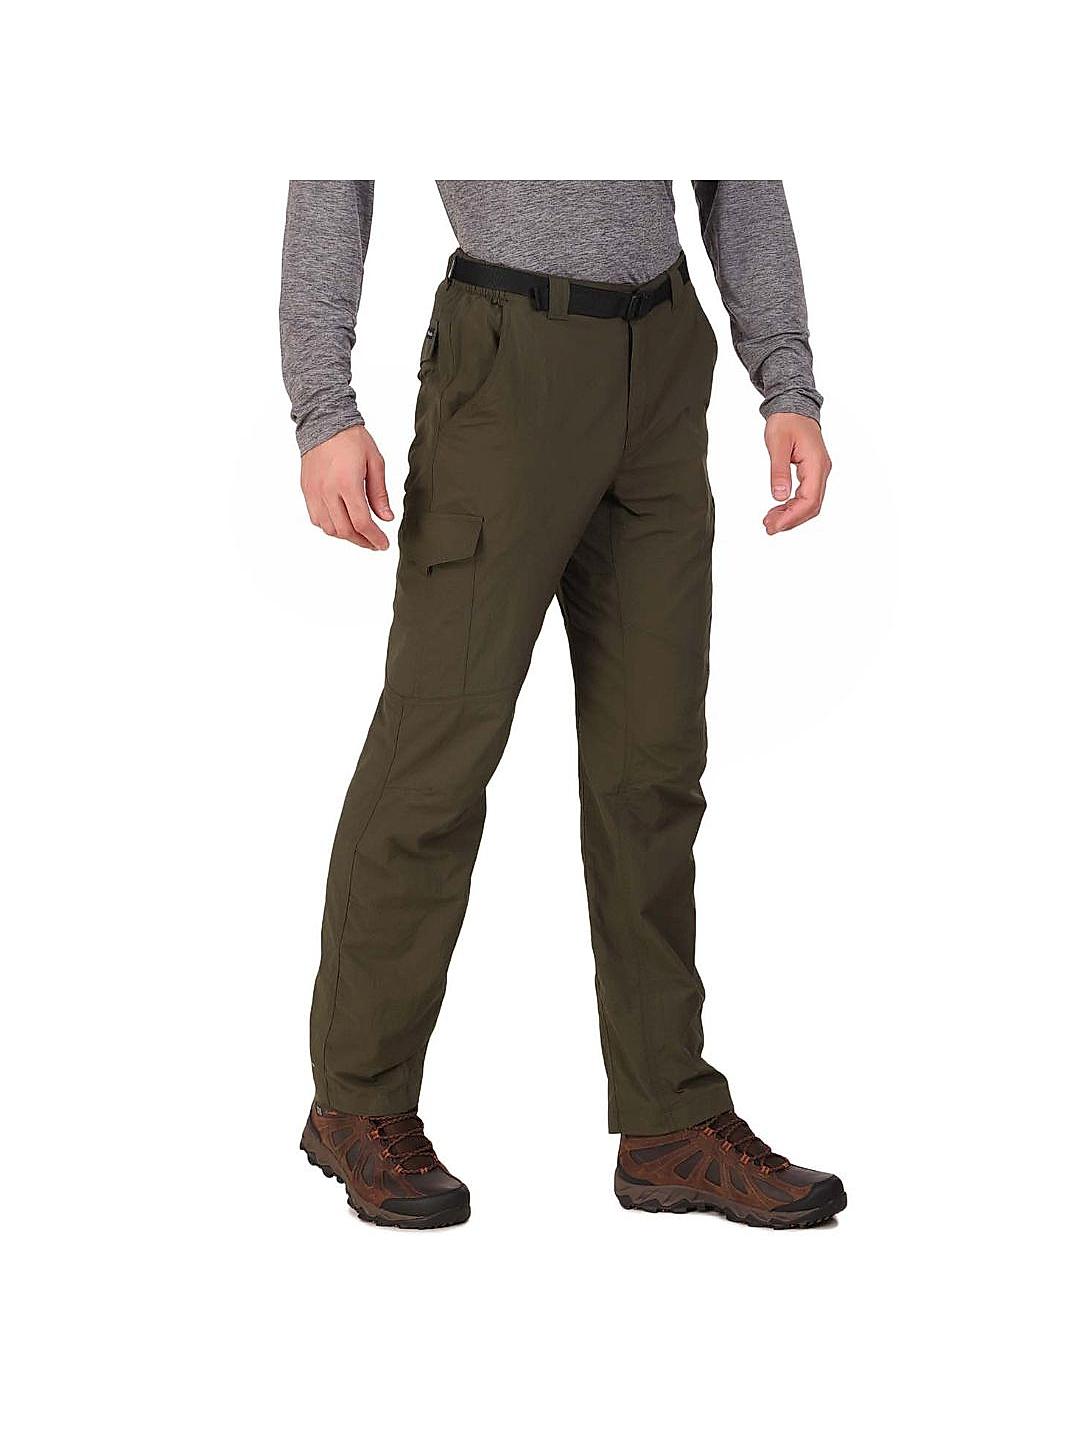 Buy Green Silver Ridge Cargo Pant for Men Online at Columbia Sportswear ...